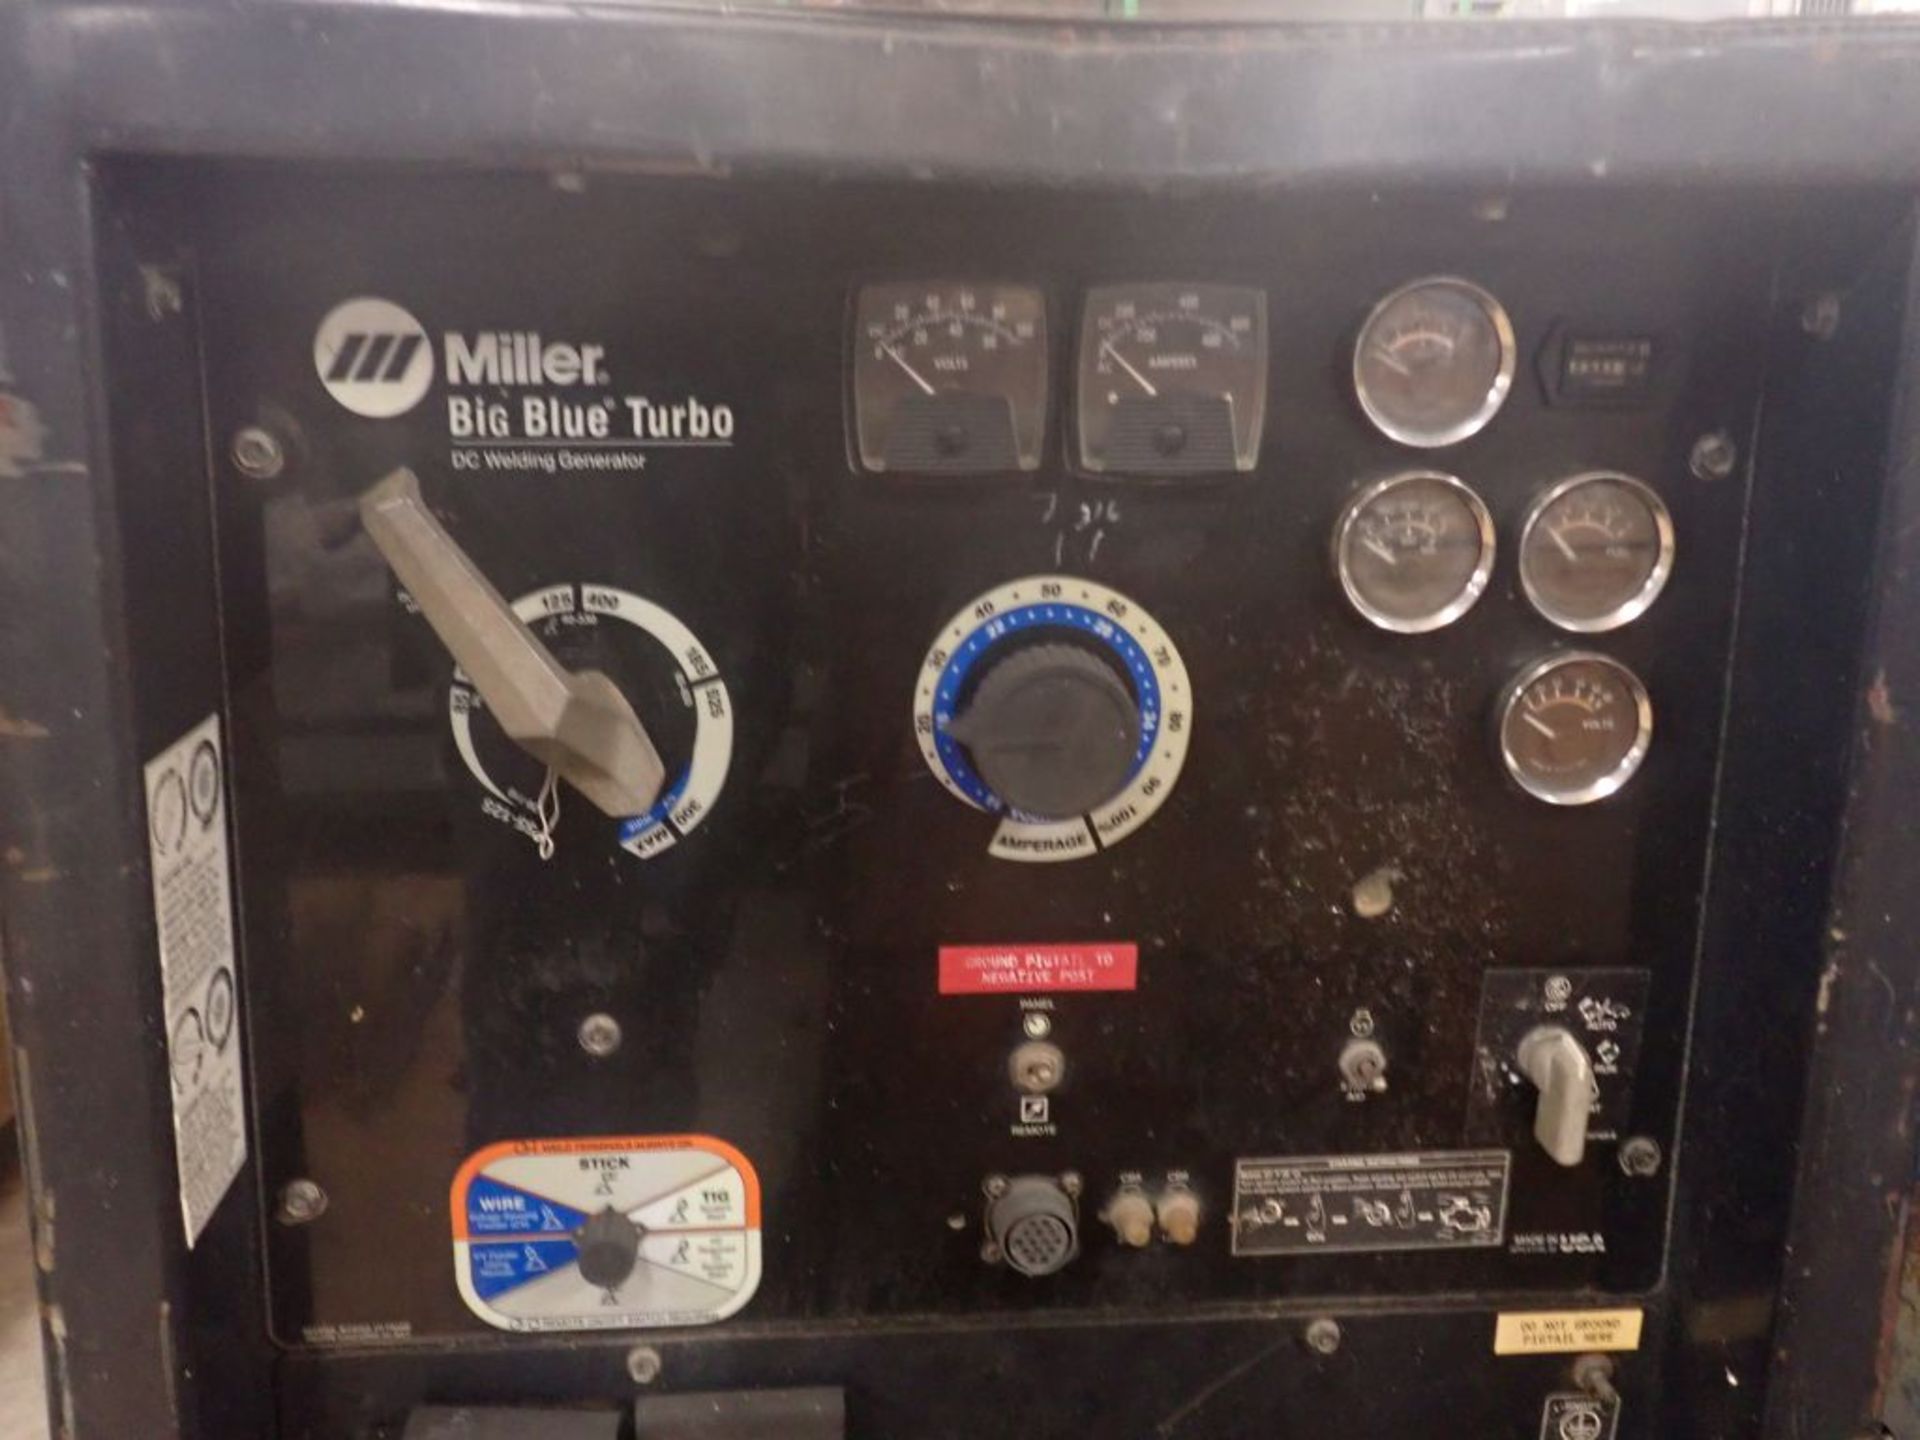 Miller Big Blue Turbo DC Welding Generator | Stock No. 907157; 8915 Hours; Engine Driven - Image 8 of 19